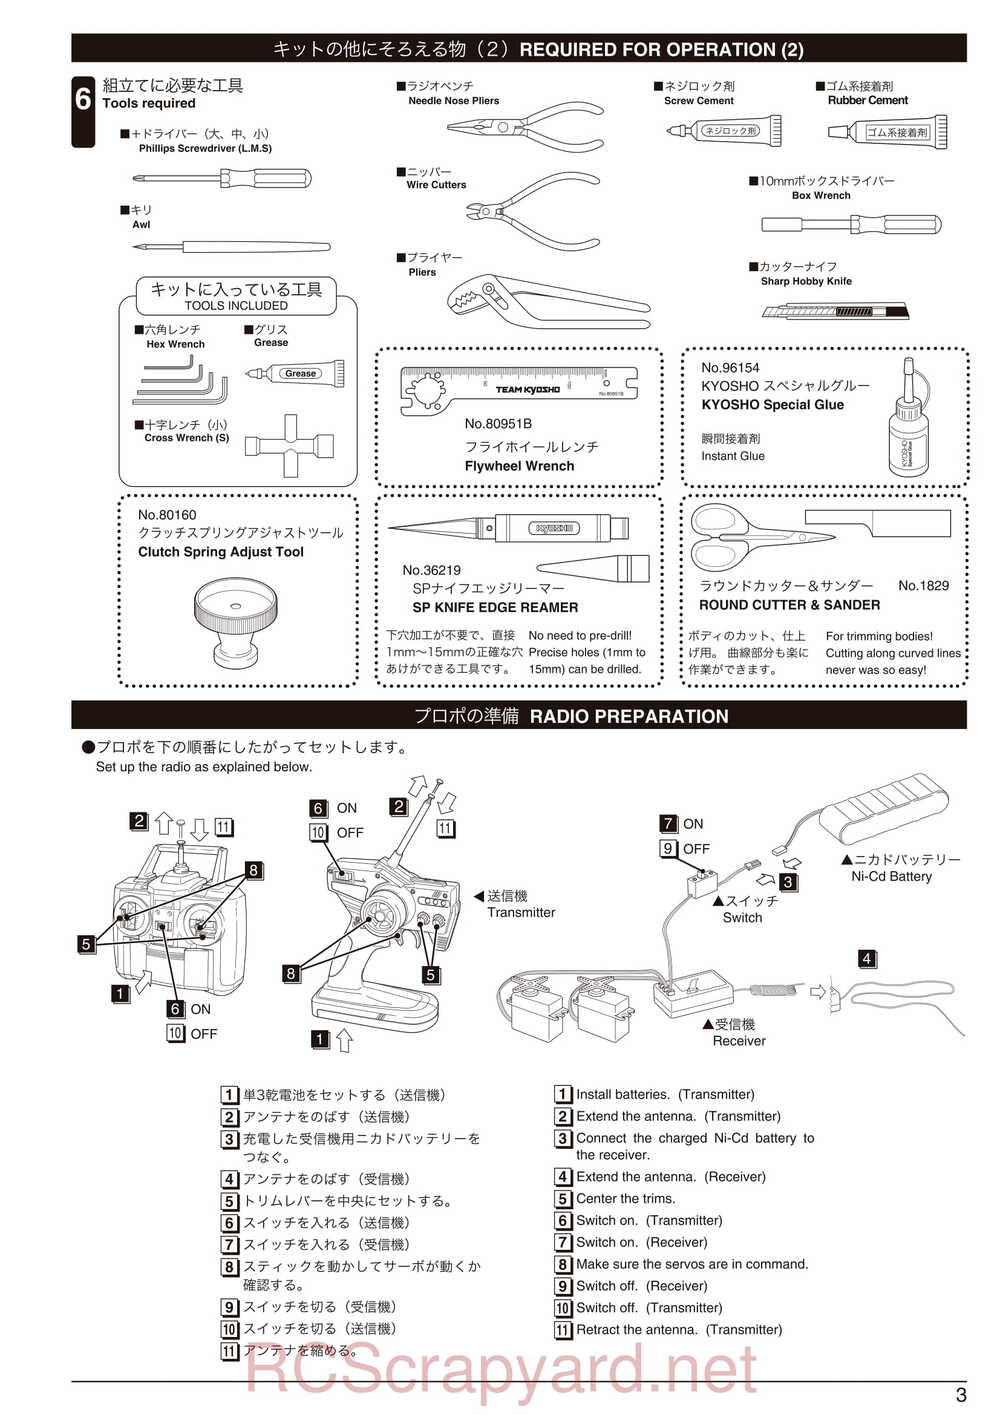 Kyosho - 31260 - V-One-RRR-Evo-WC - Manual - Page 03